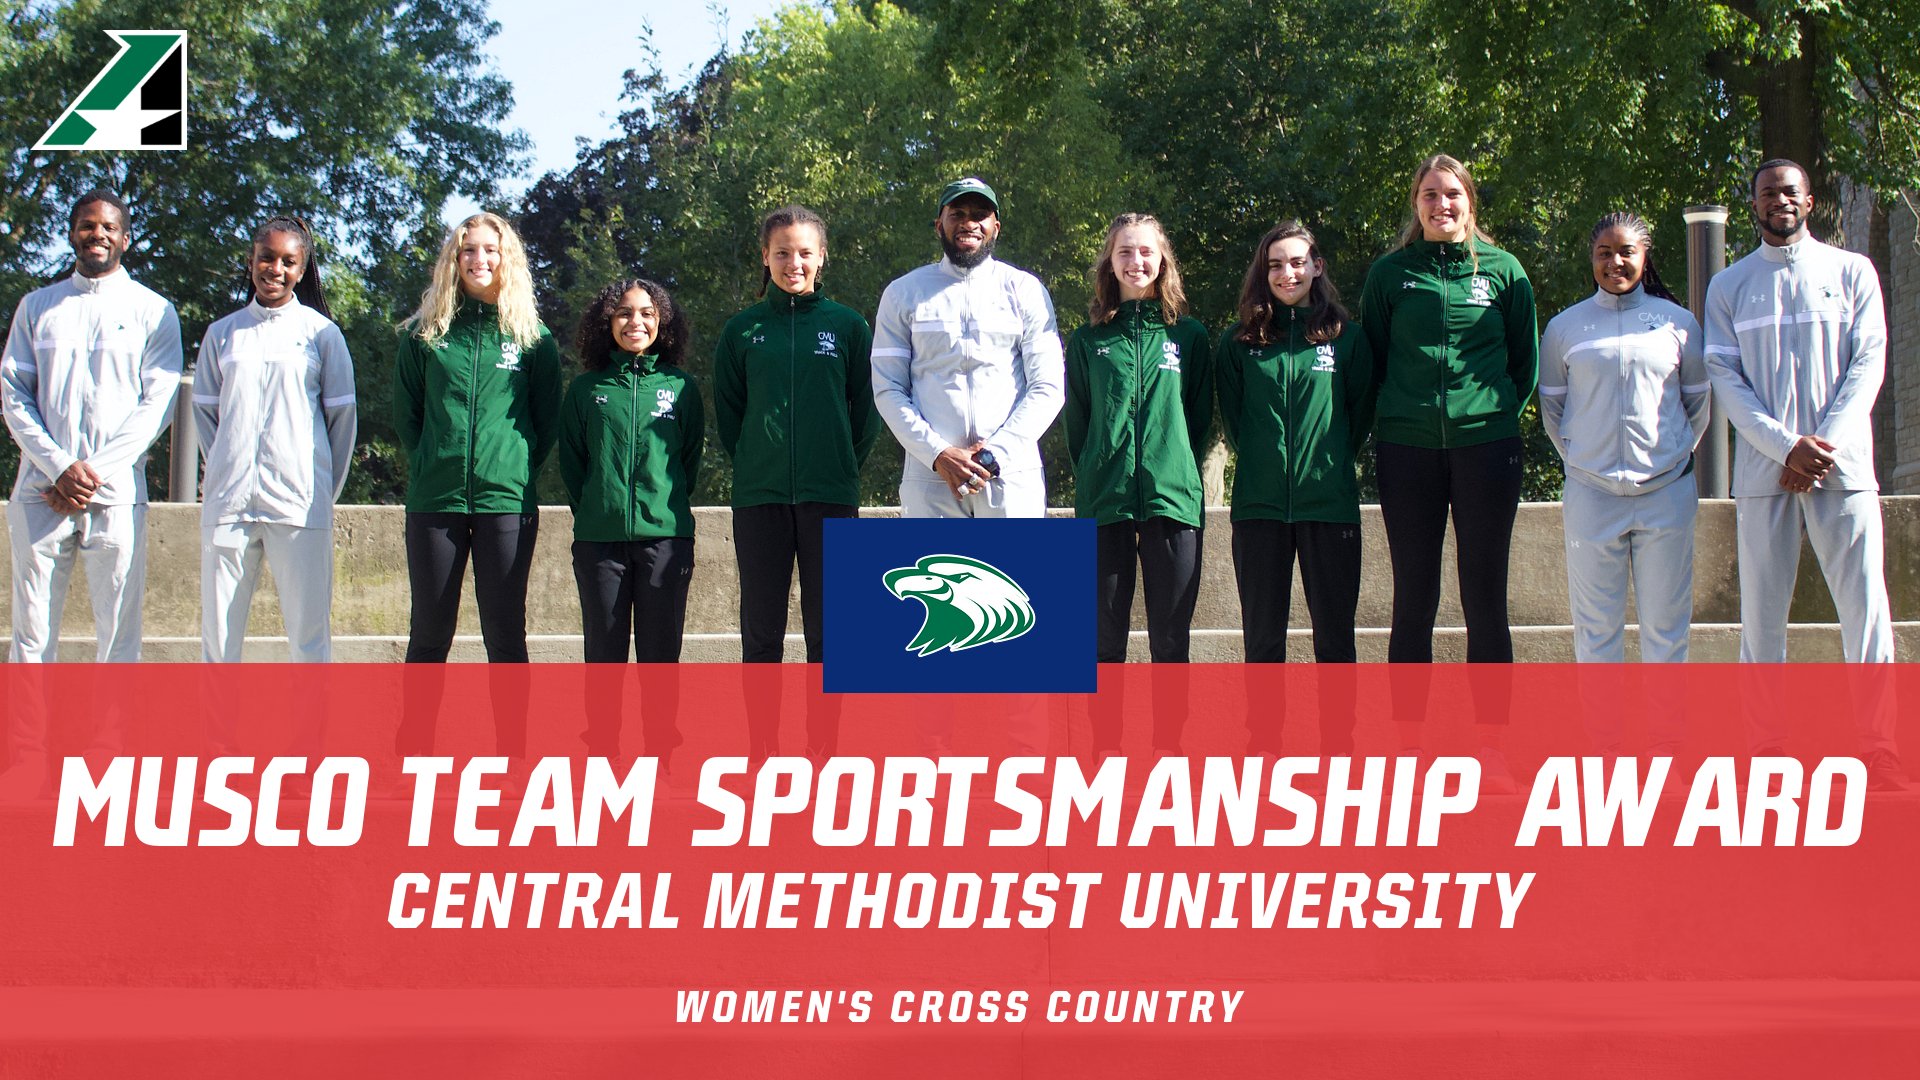 Central Methodist University Women’s Cross Country Selected for Musco Team Sportsmanship Award